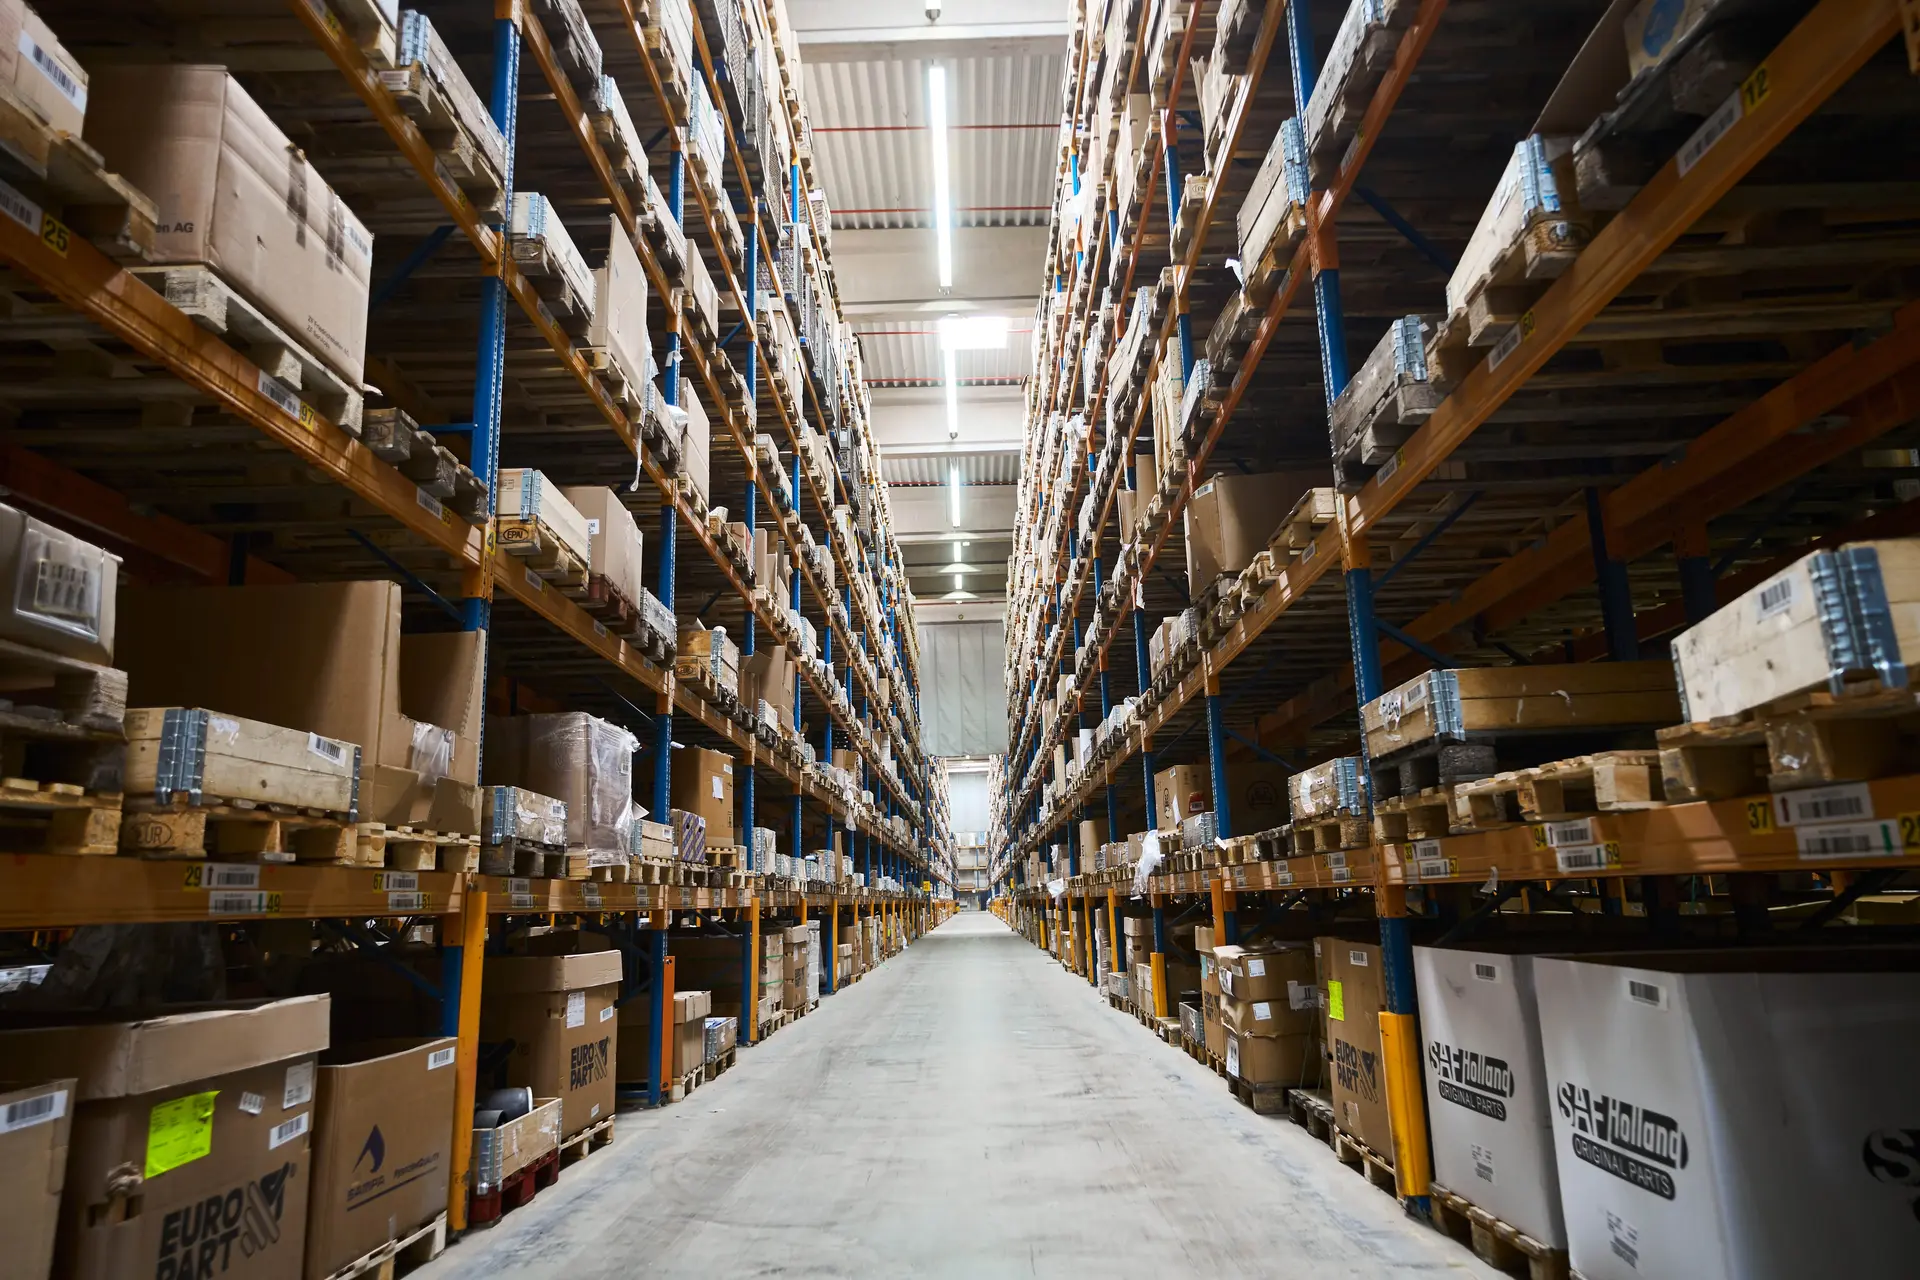 Aisle of a warehouse with high racks